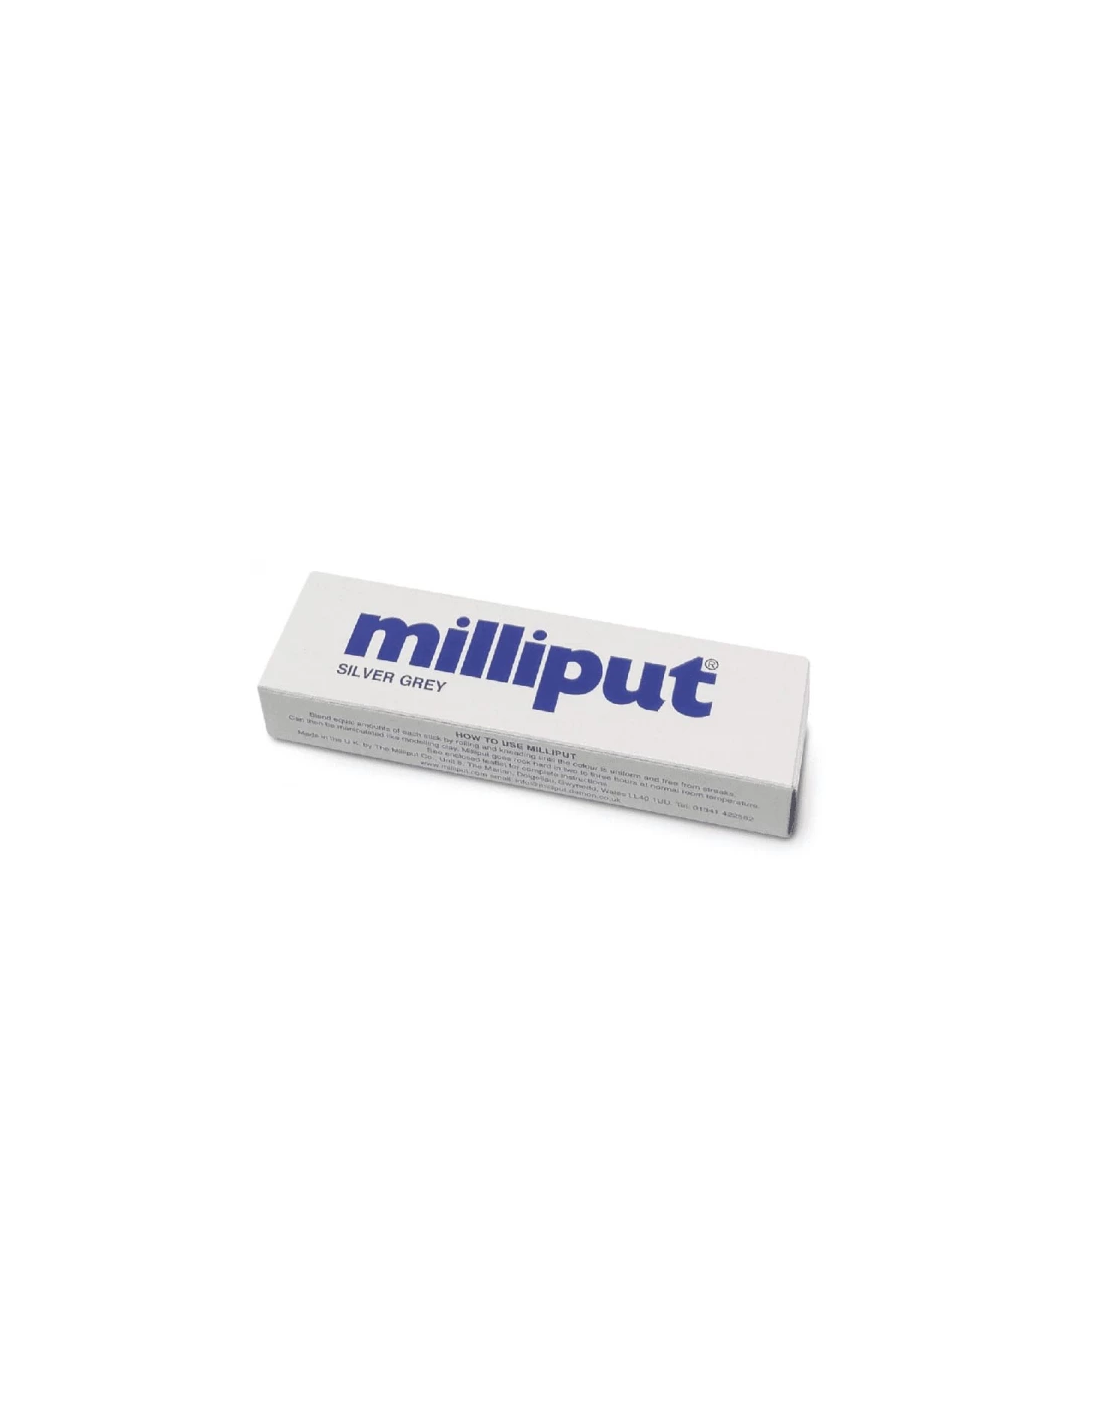 Milliput Silver Grey - Two Part Epoxy Putty